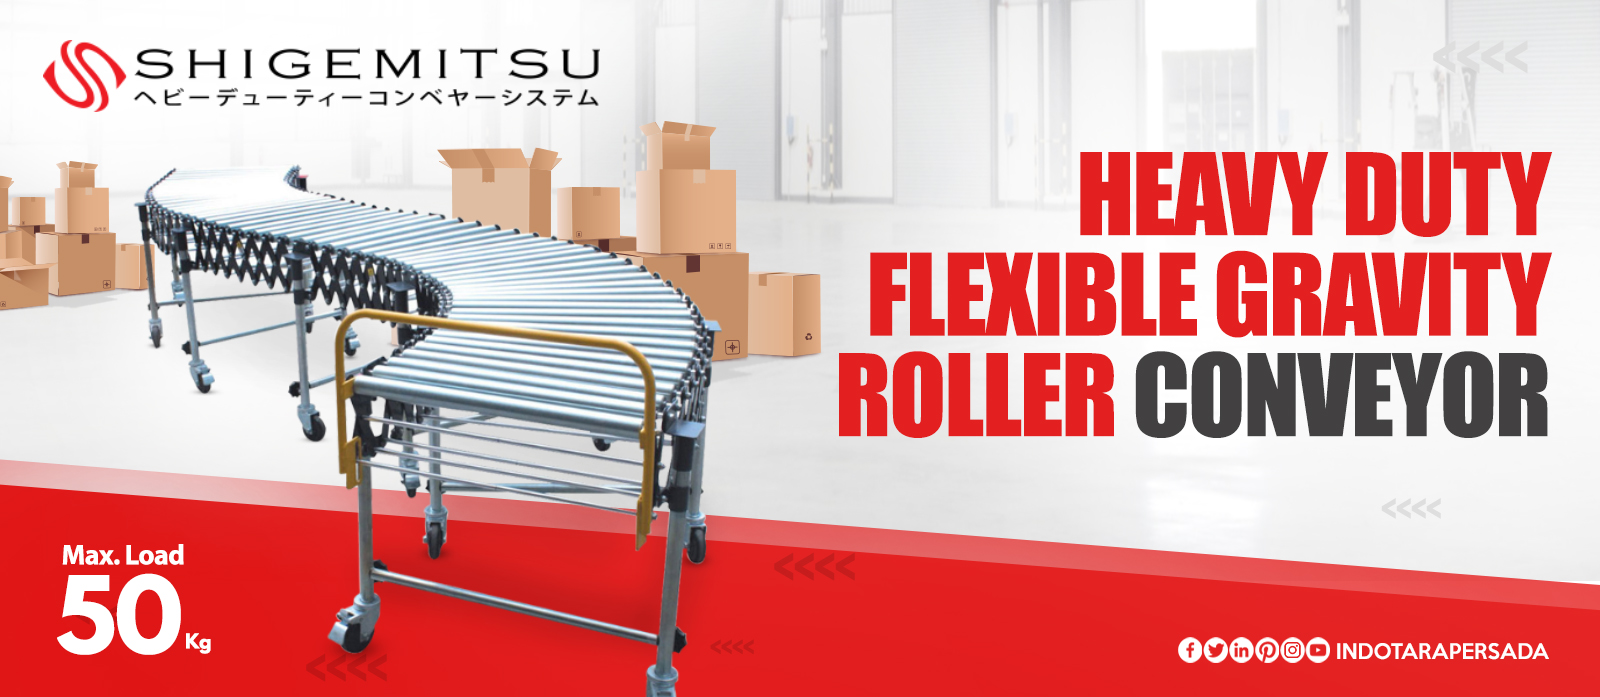 Jual Shigemitsu Flexible Gravity Roller Conveyor, Harga Flexible Gravity Roller Conveyor, Jual Flexible Gravity Roller Conveyor Dengan Harga Murah